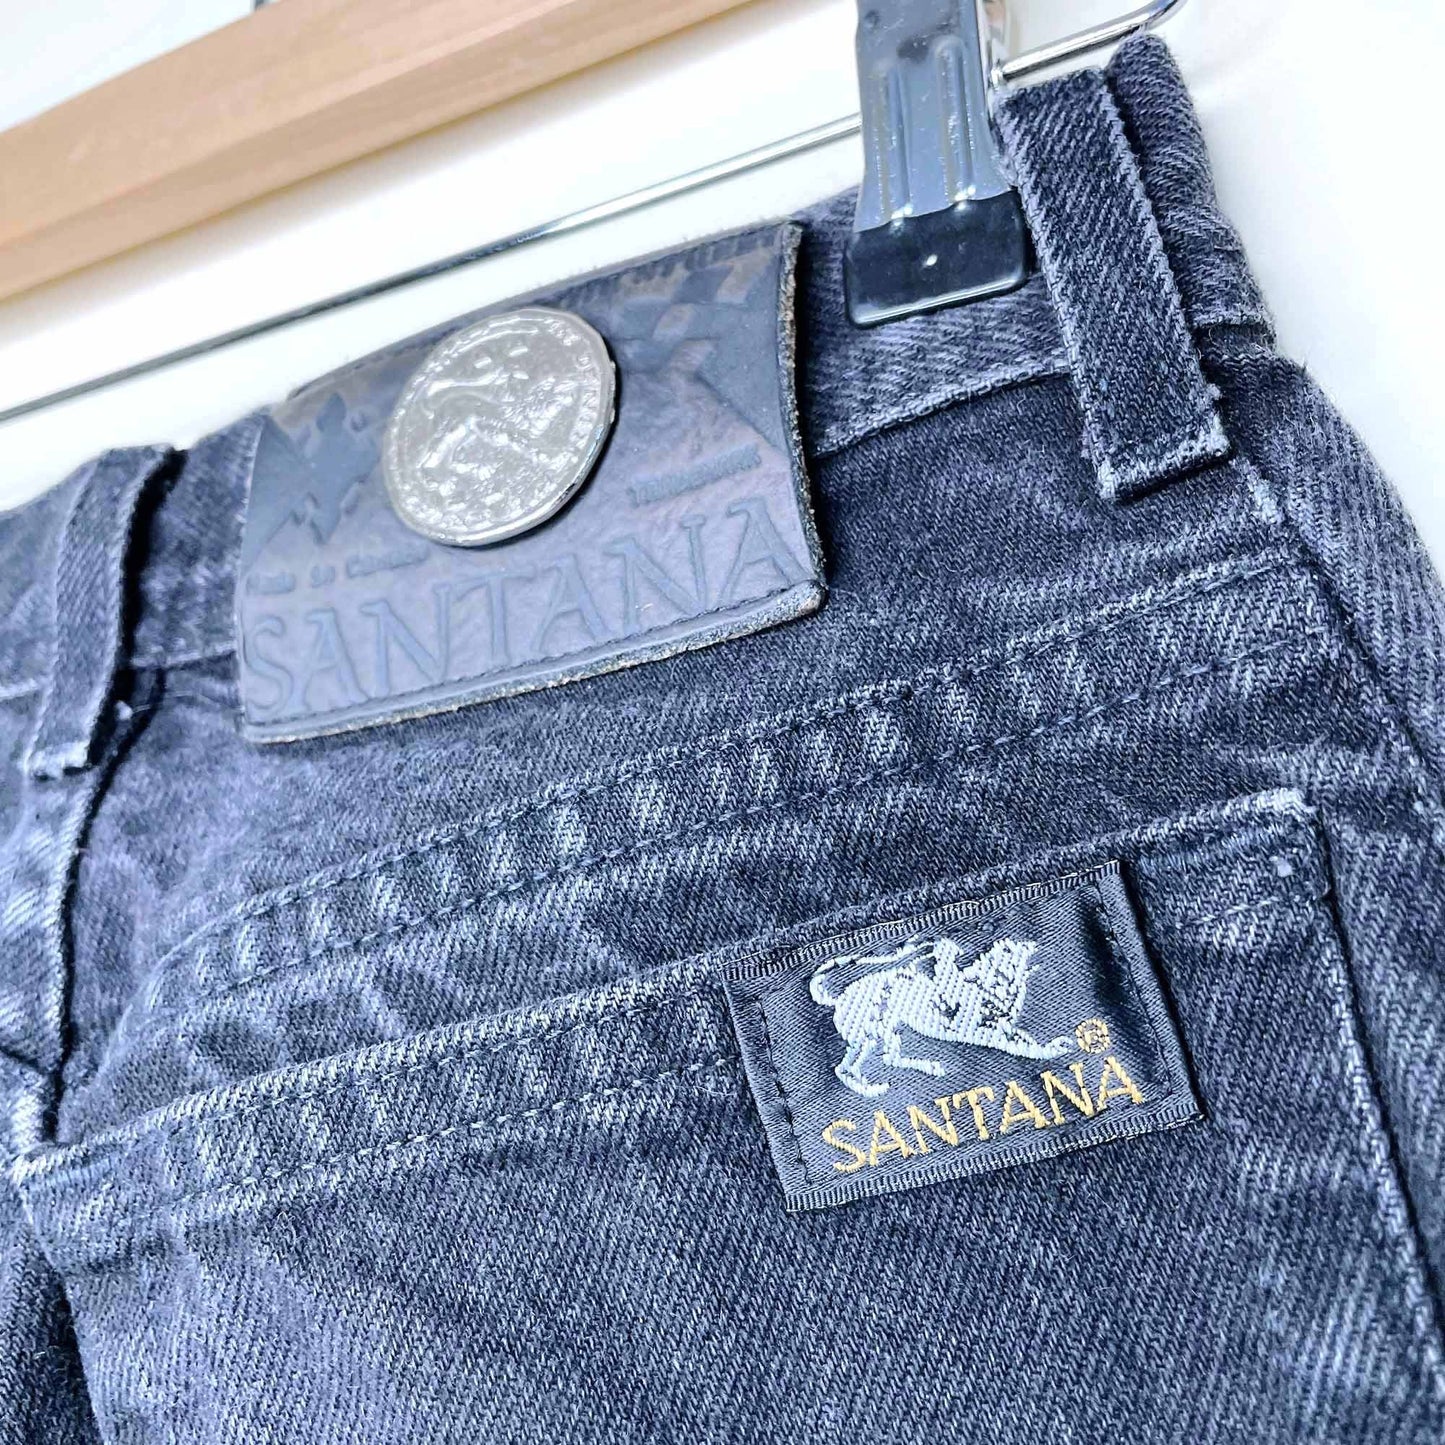 vintage santana parasuco slim high rise jeans - size 28 (24)